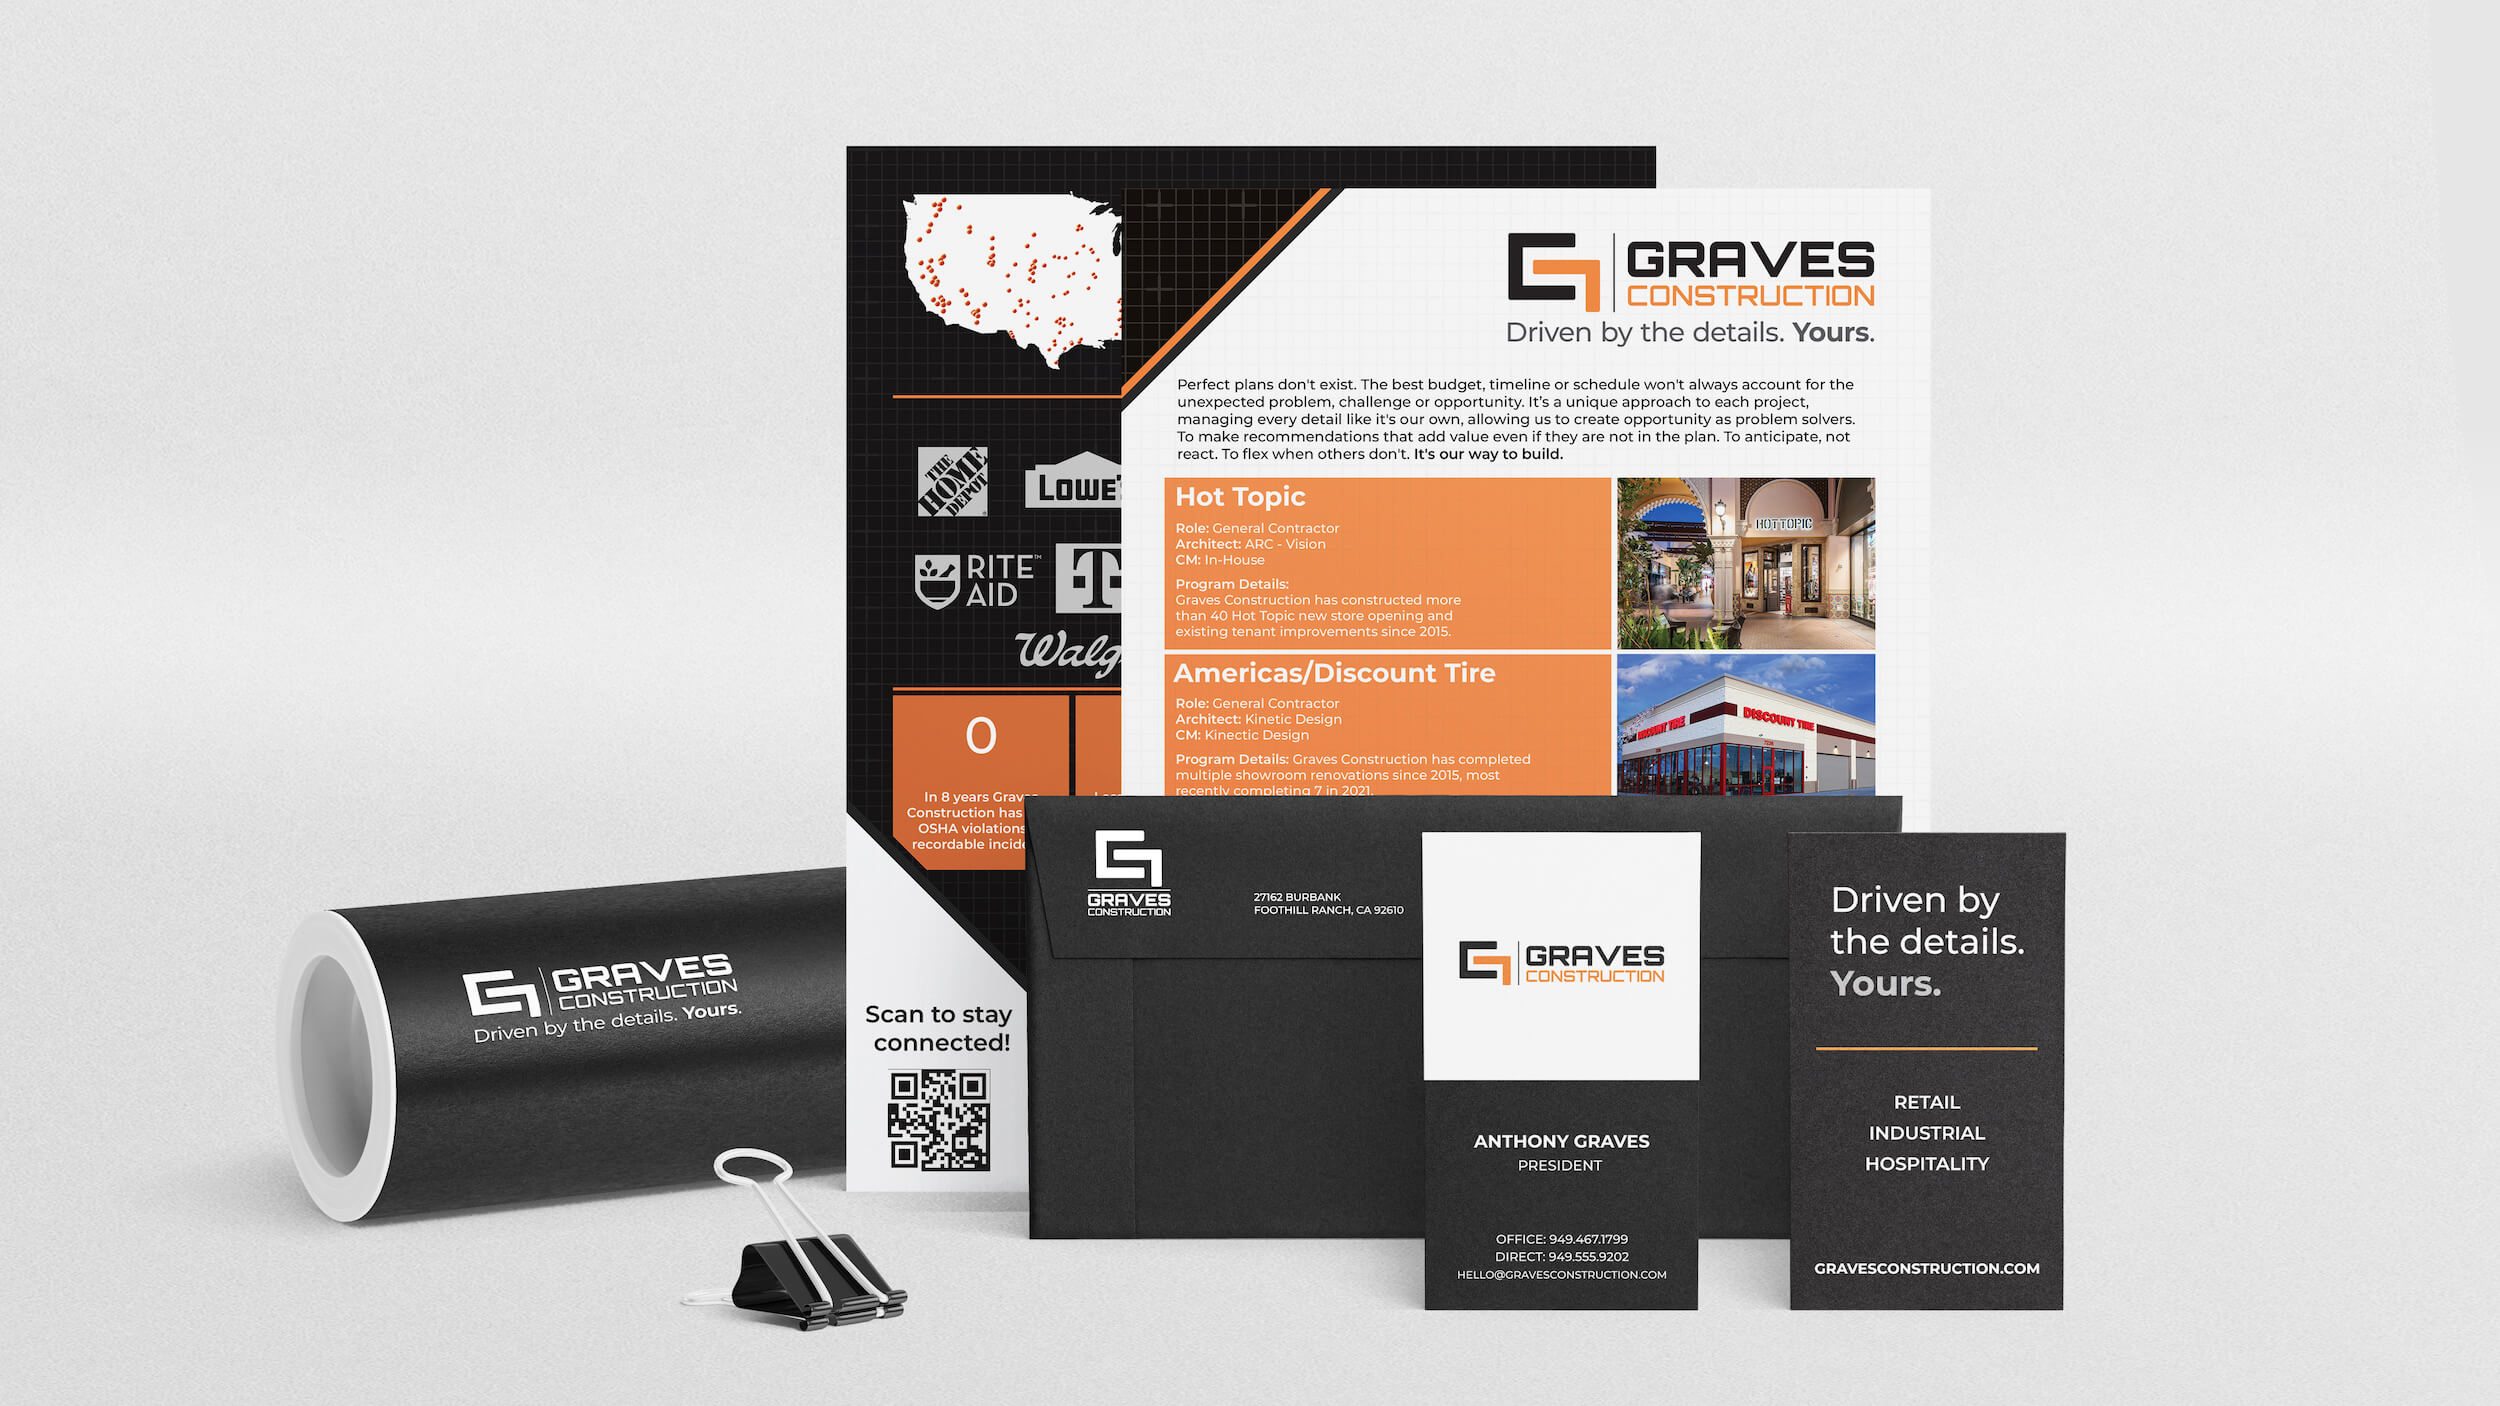 Graves Construction case study